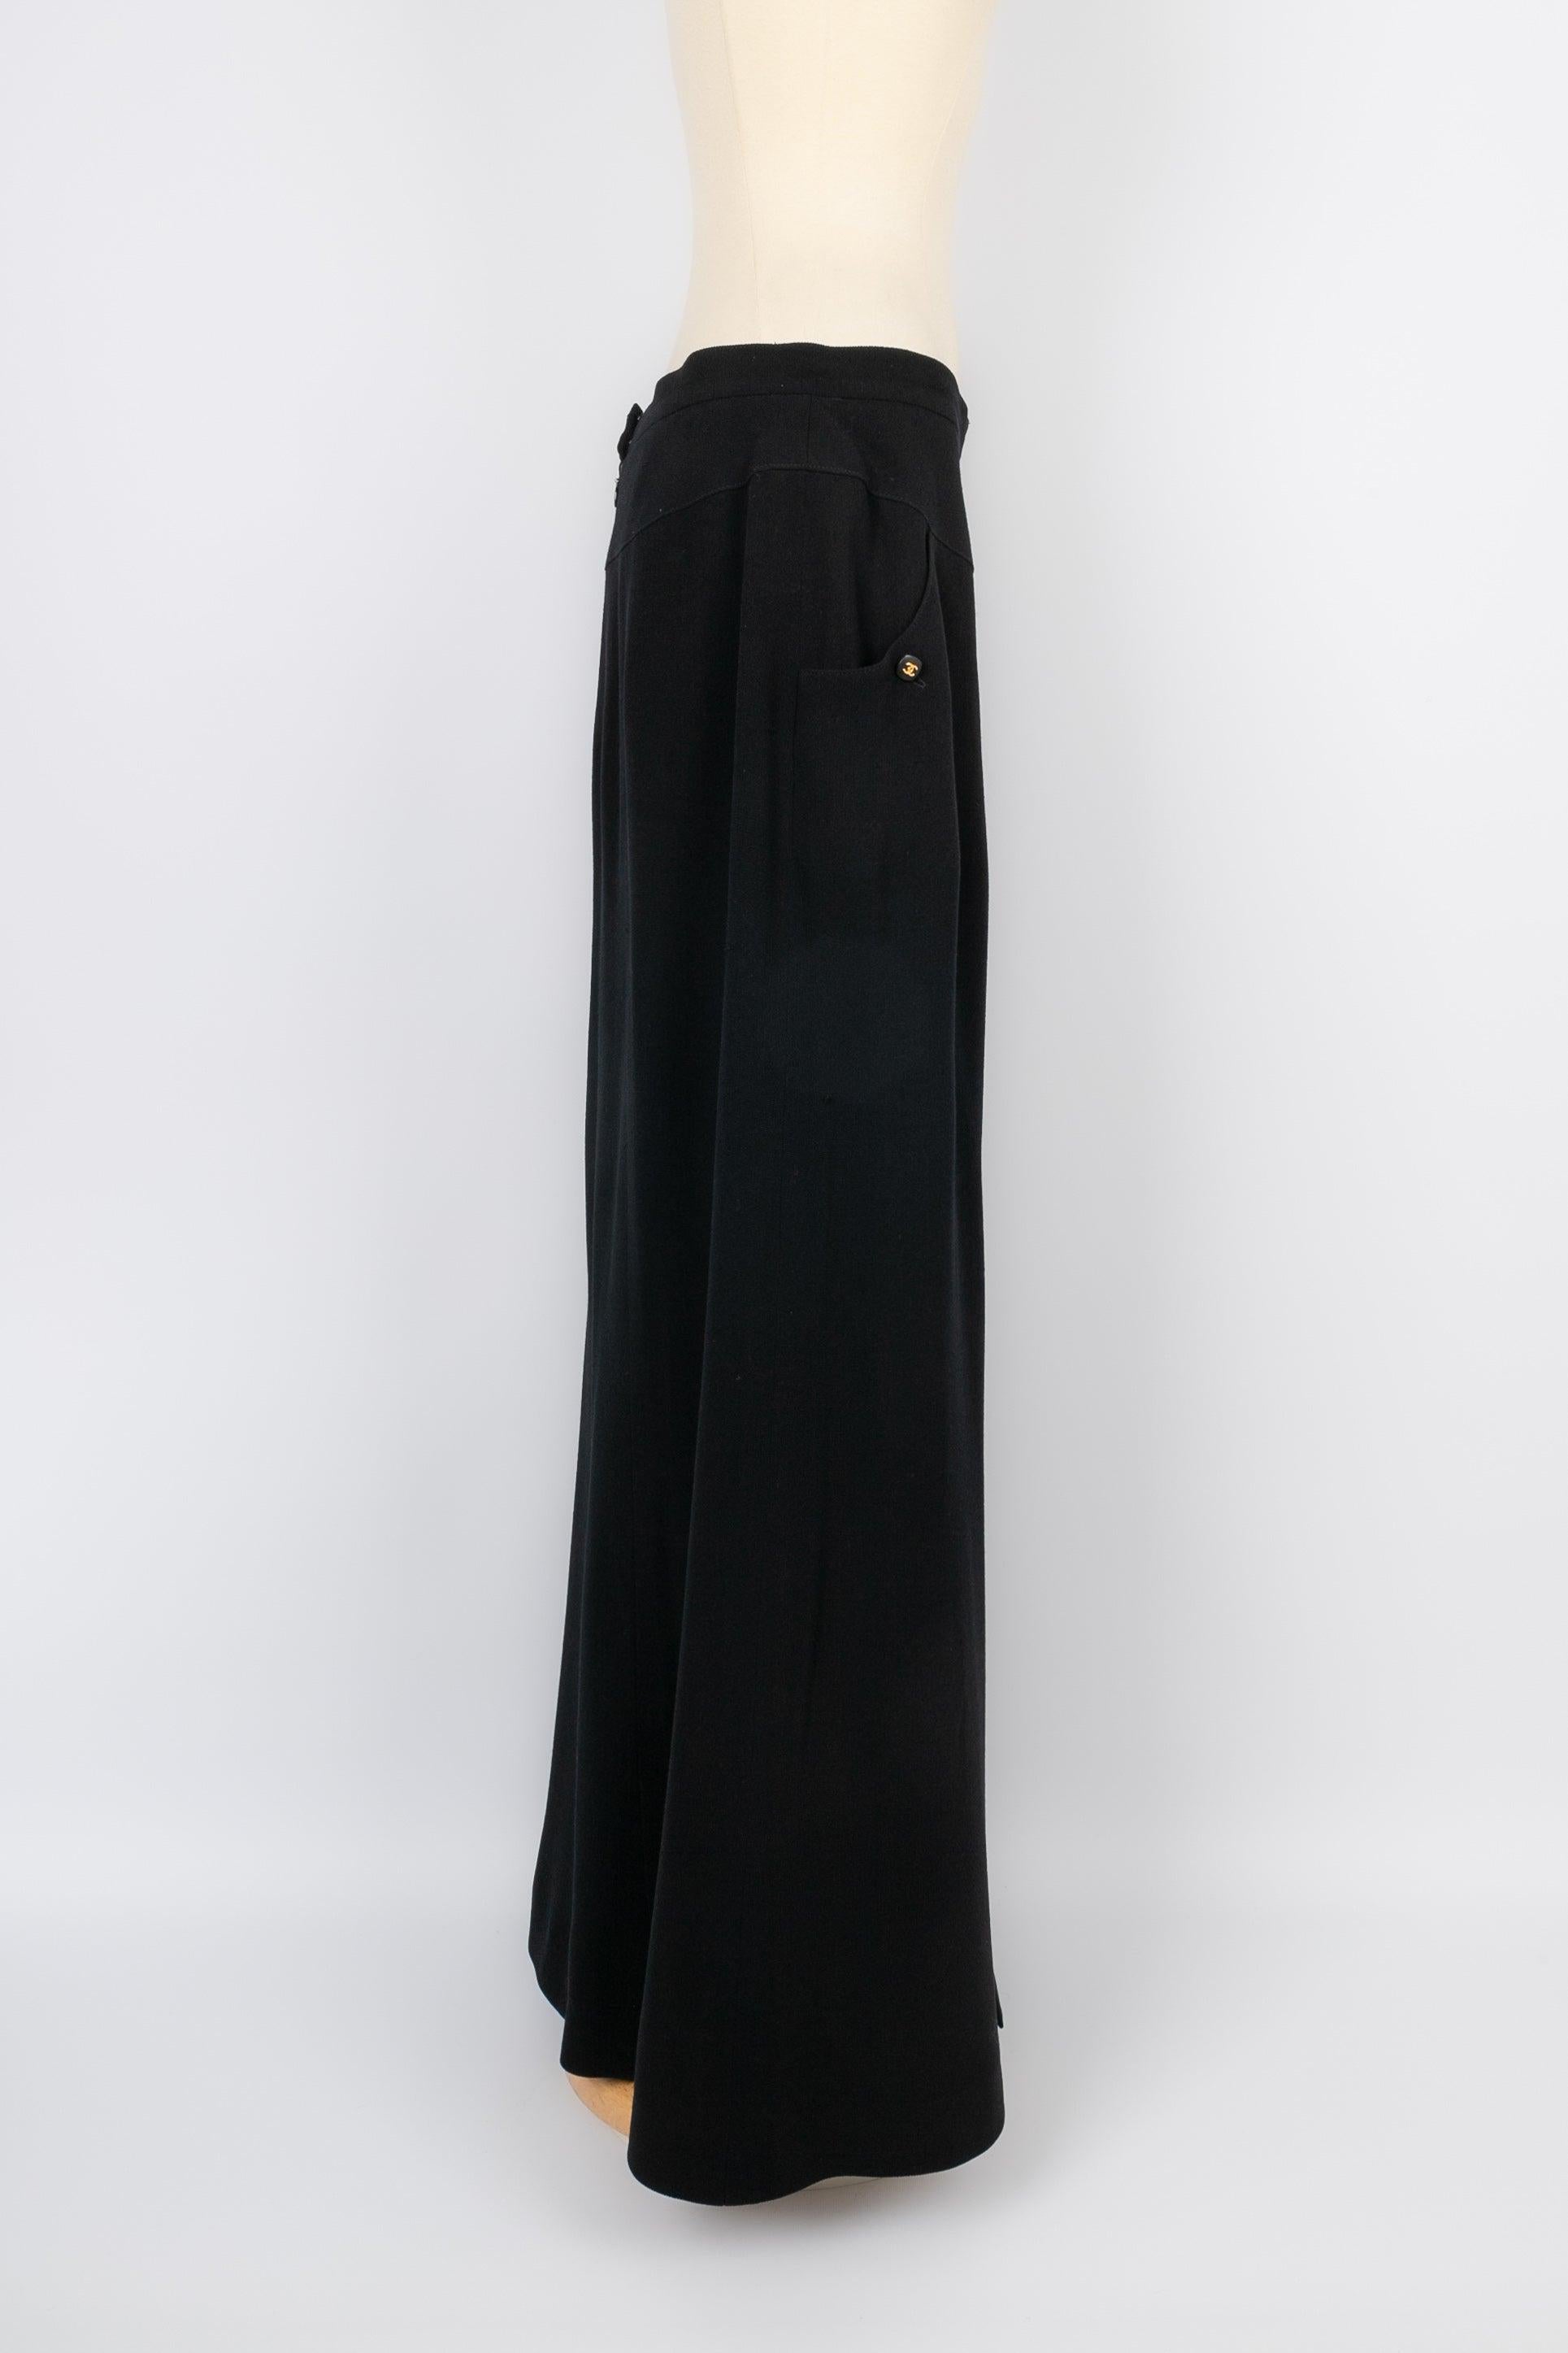 Women's Chanel Black Wool Long Skirt, 1996 For Sale